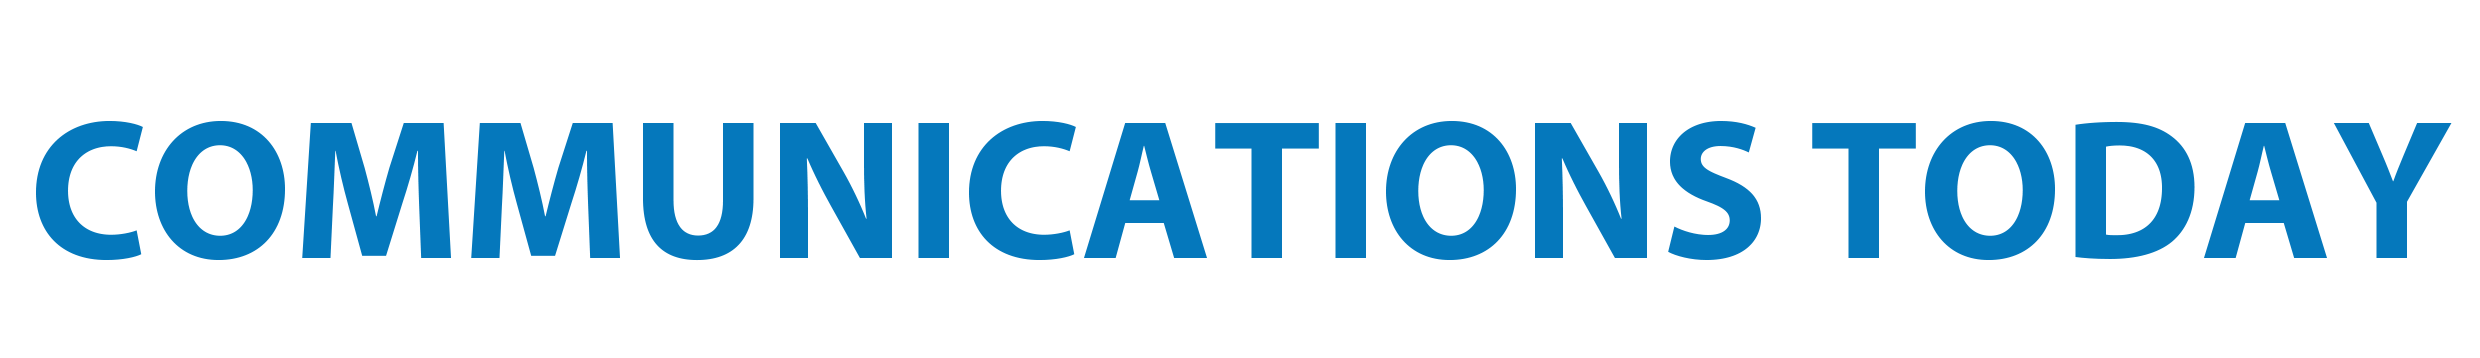 Media Partner Communication Logo 